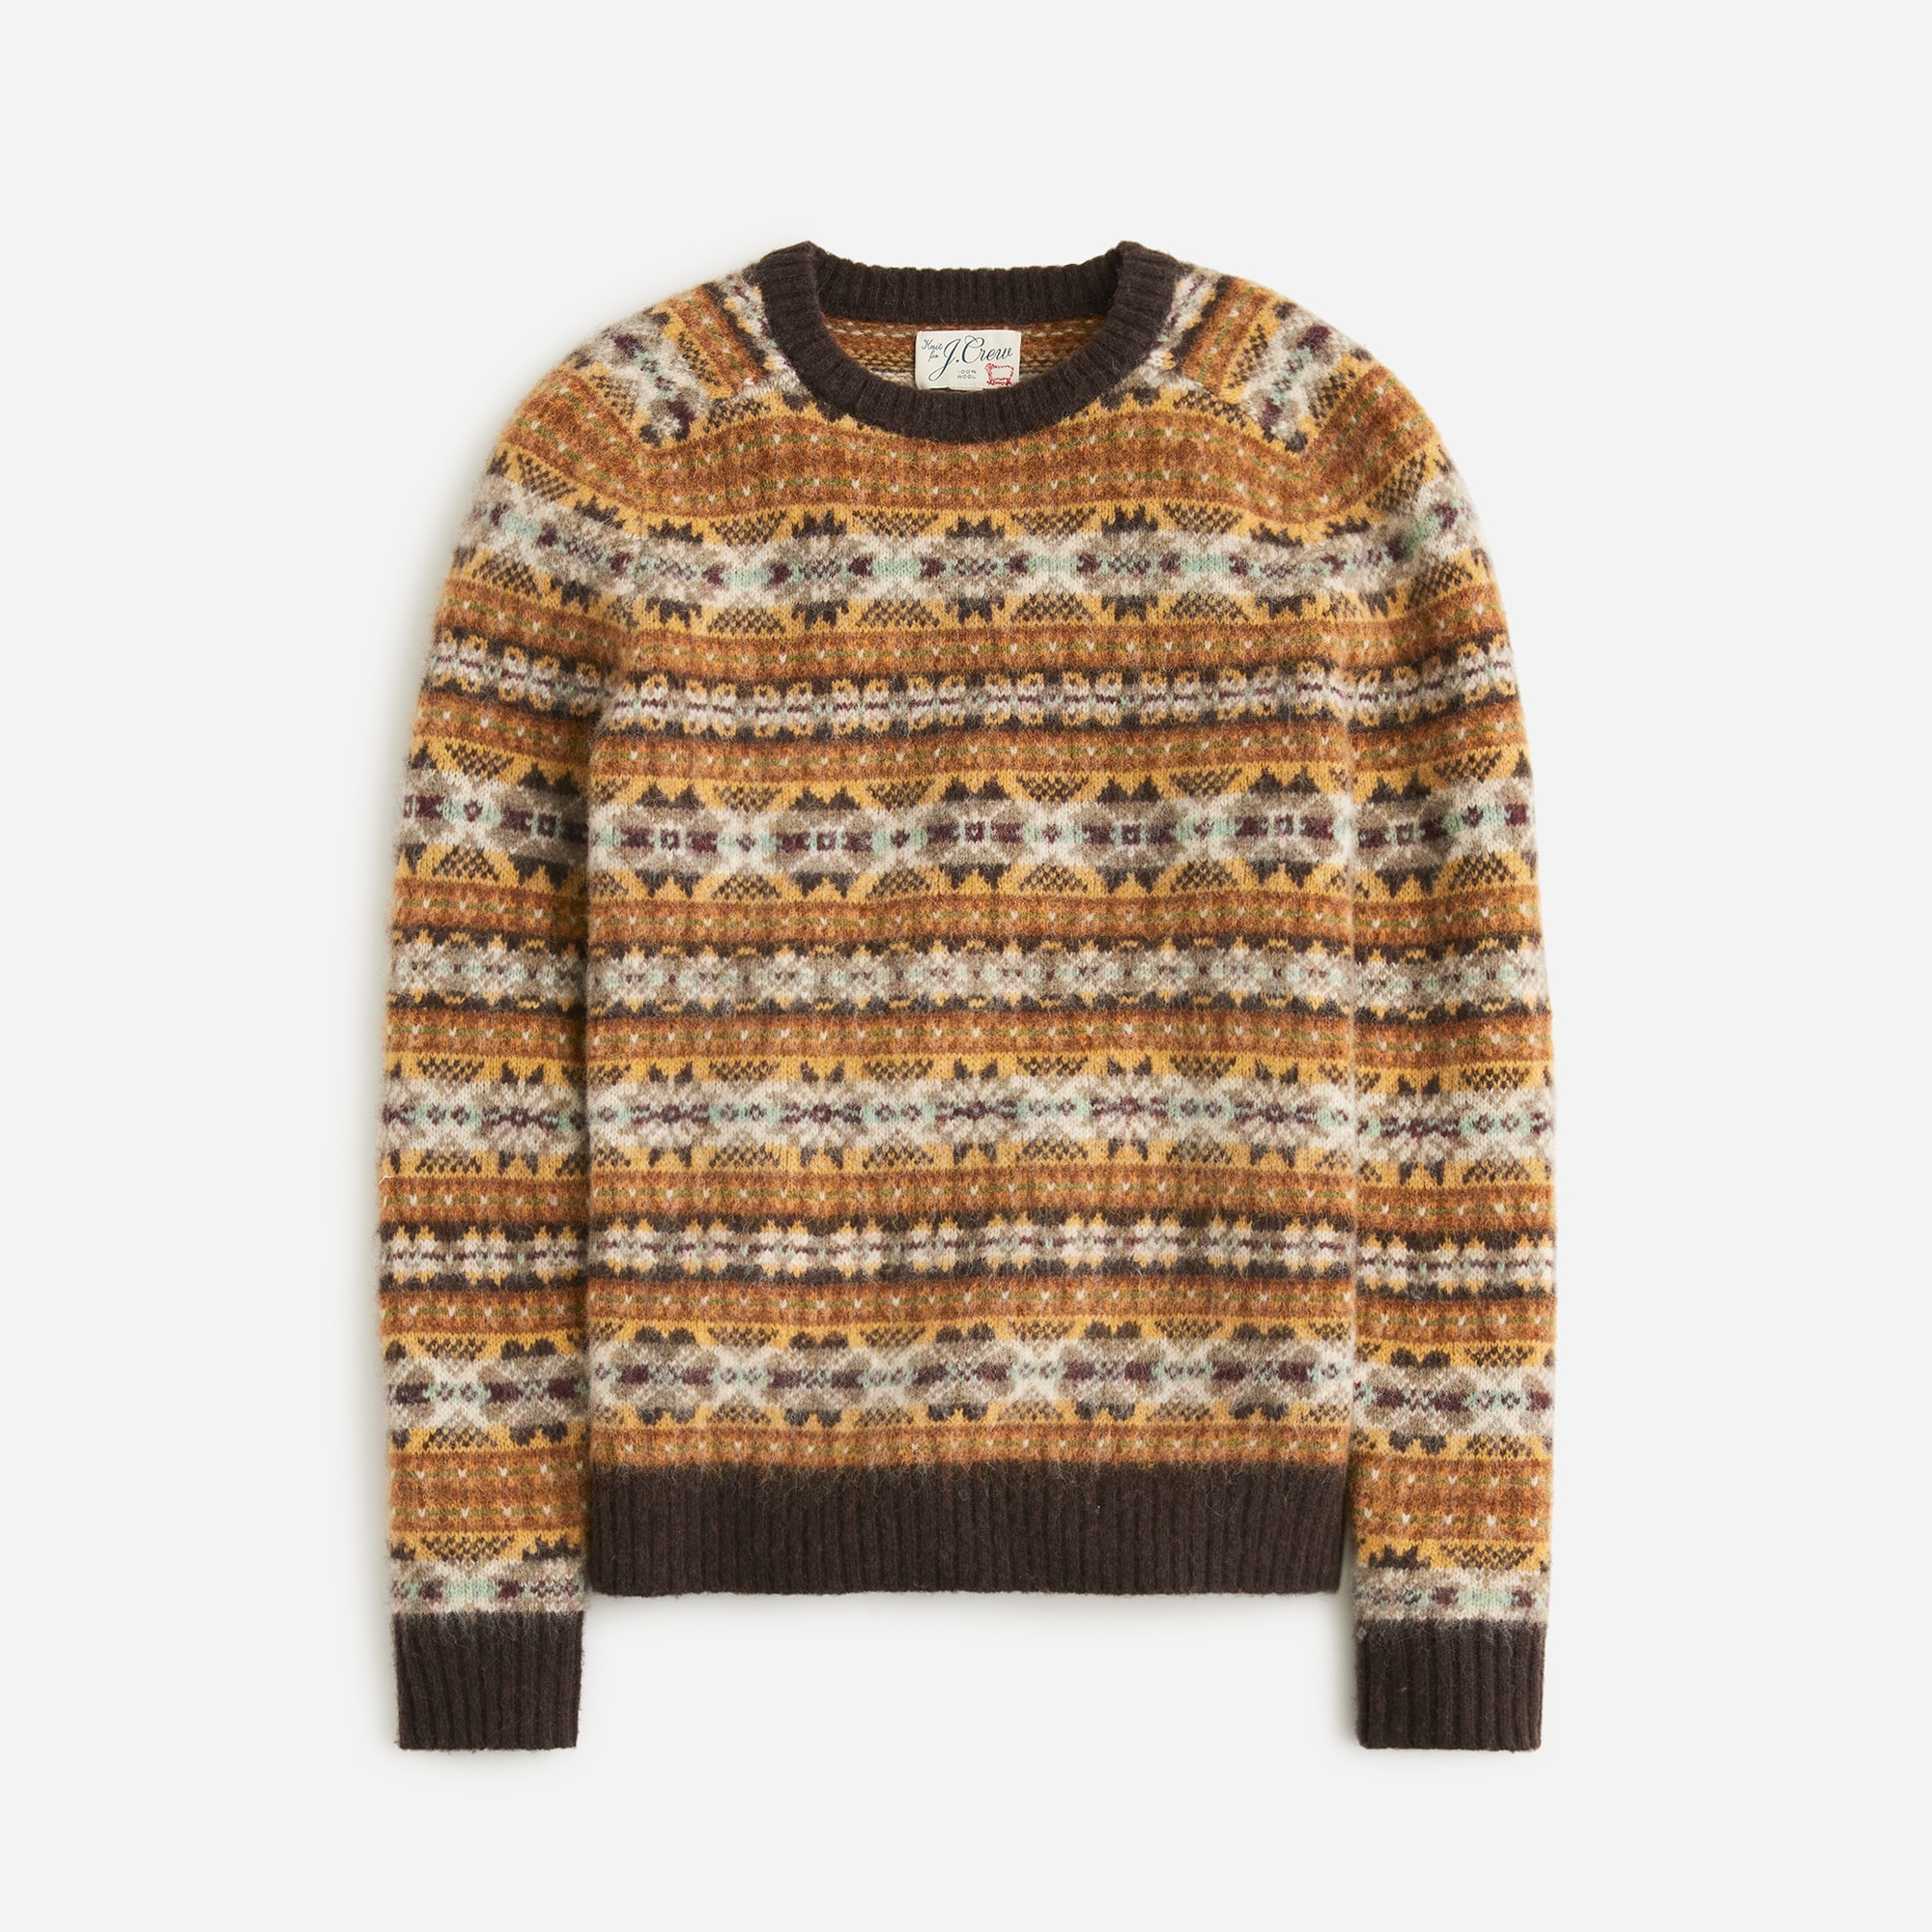  Brushed wool Fair Isle sweater